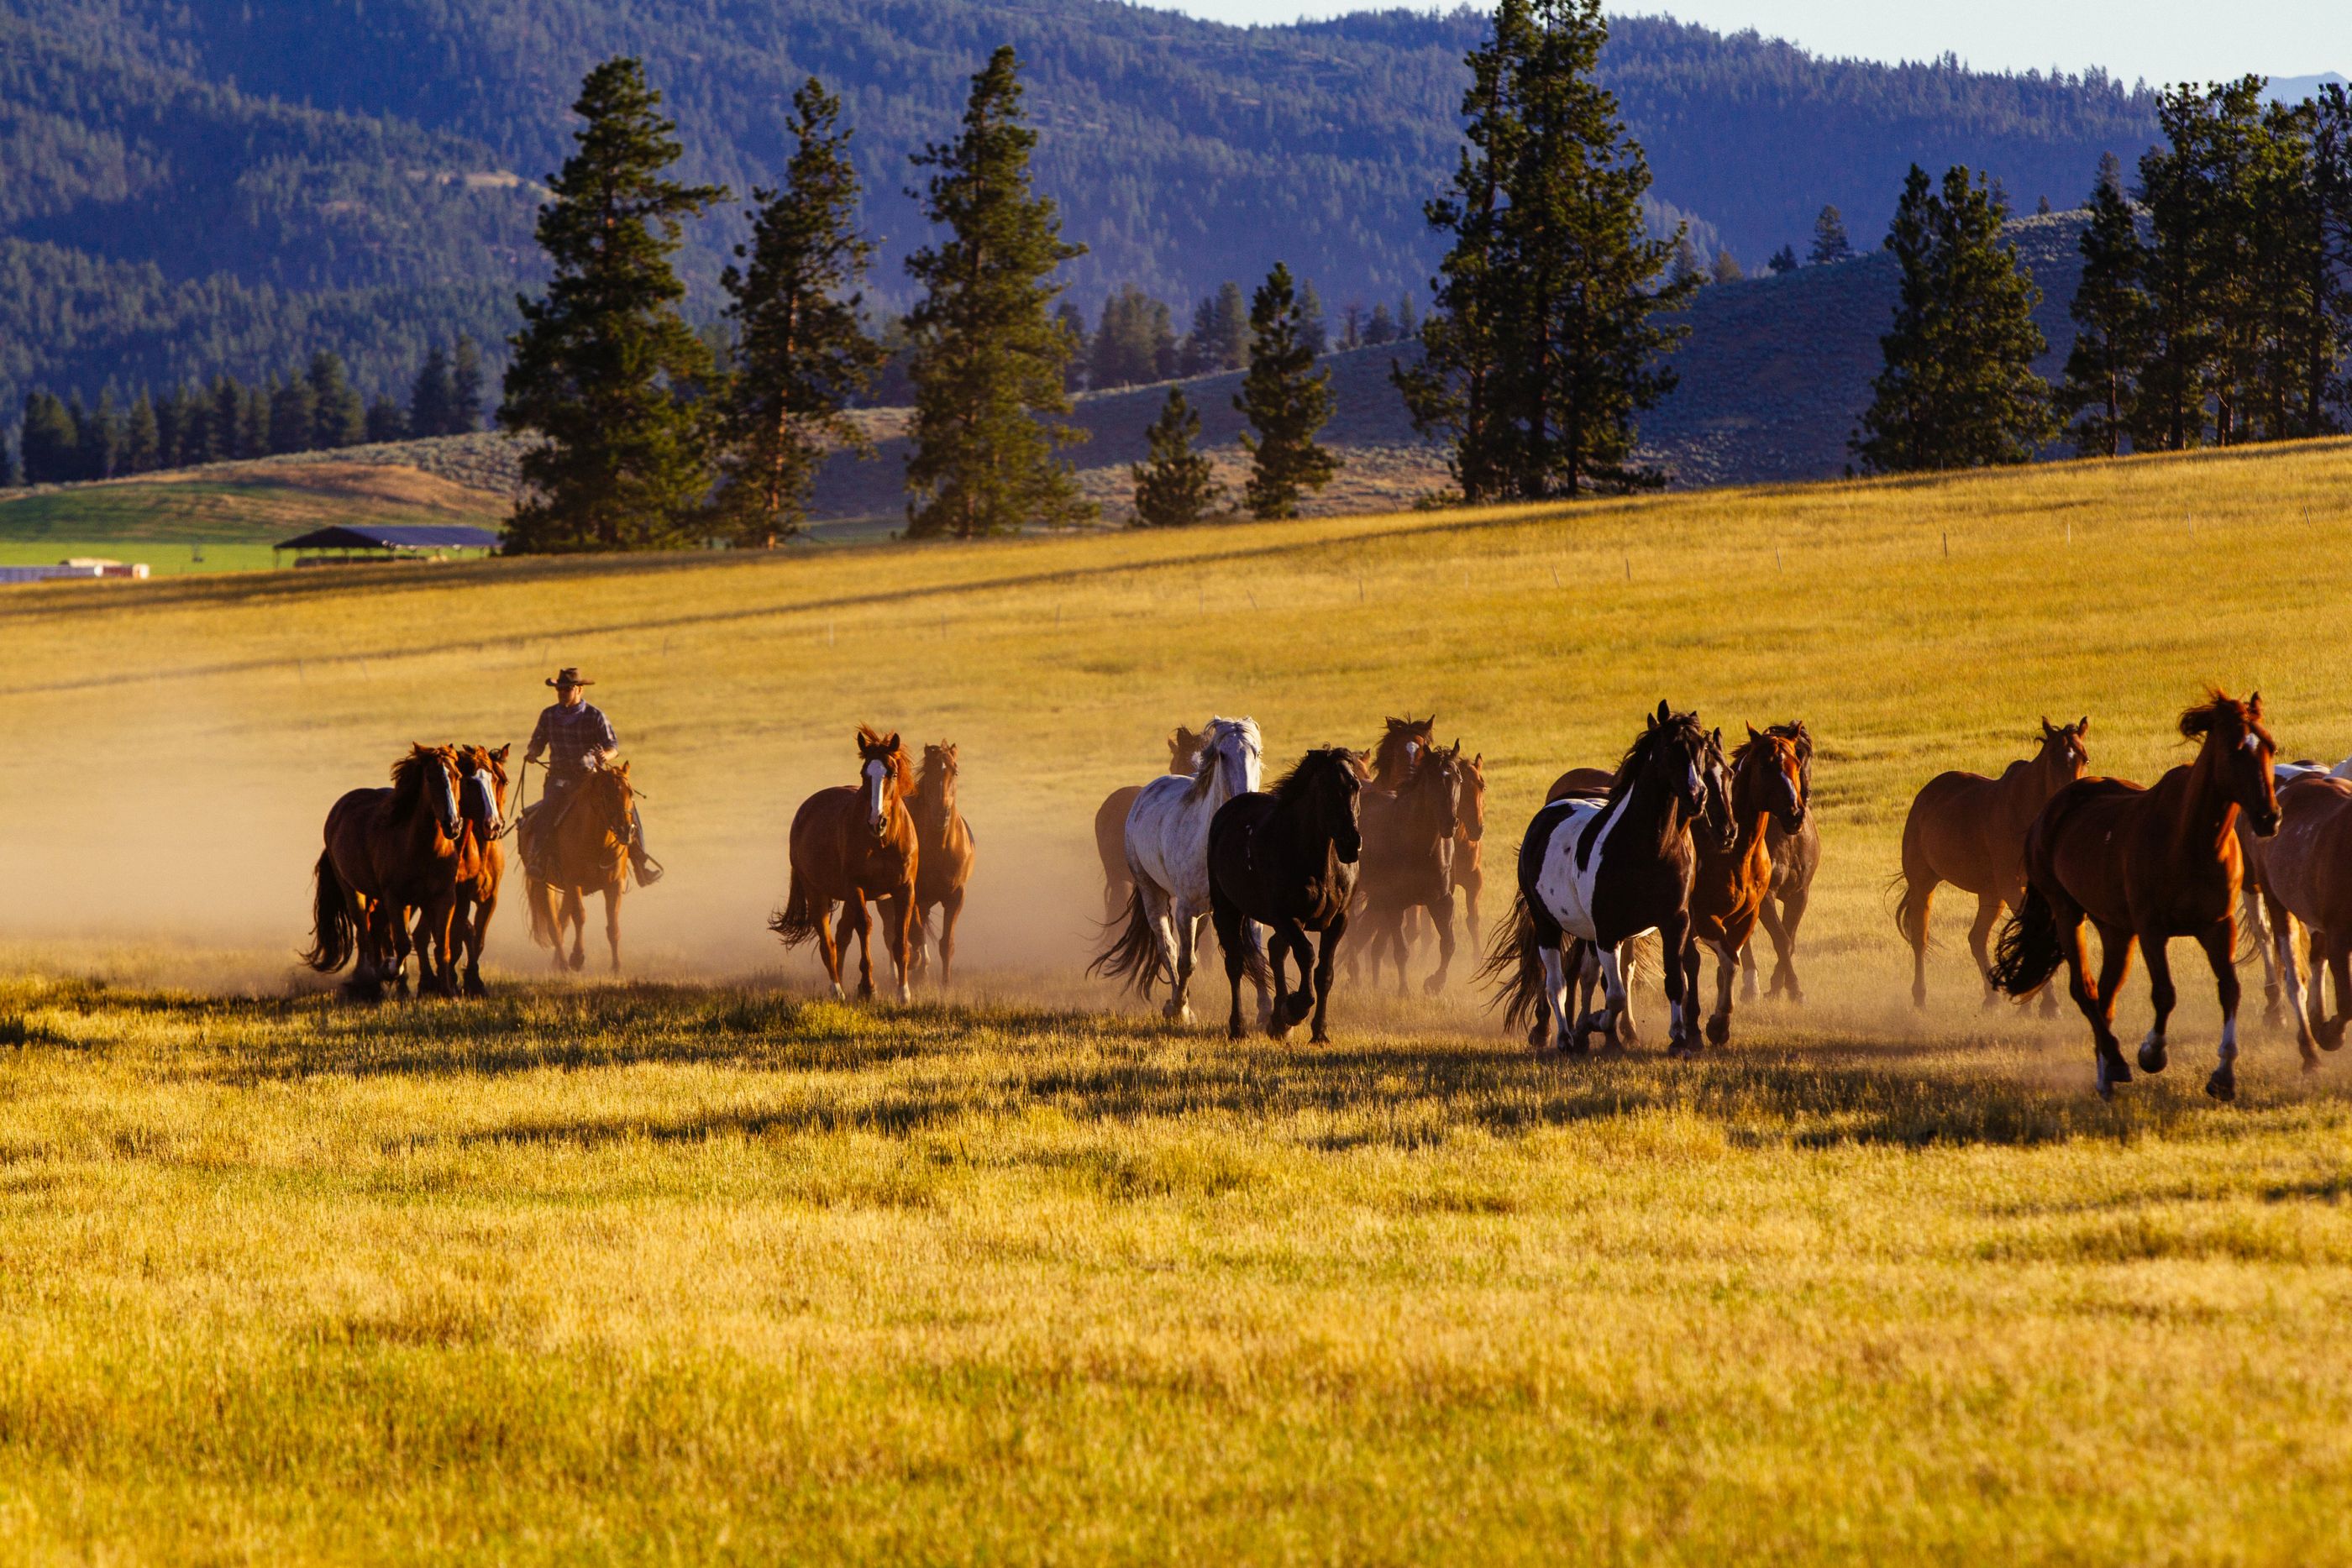 A cowboy herding horses near Paws Up Ranch, USA